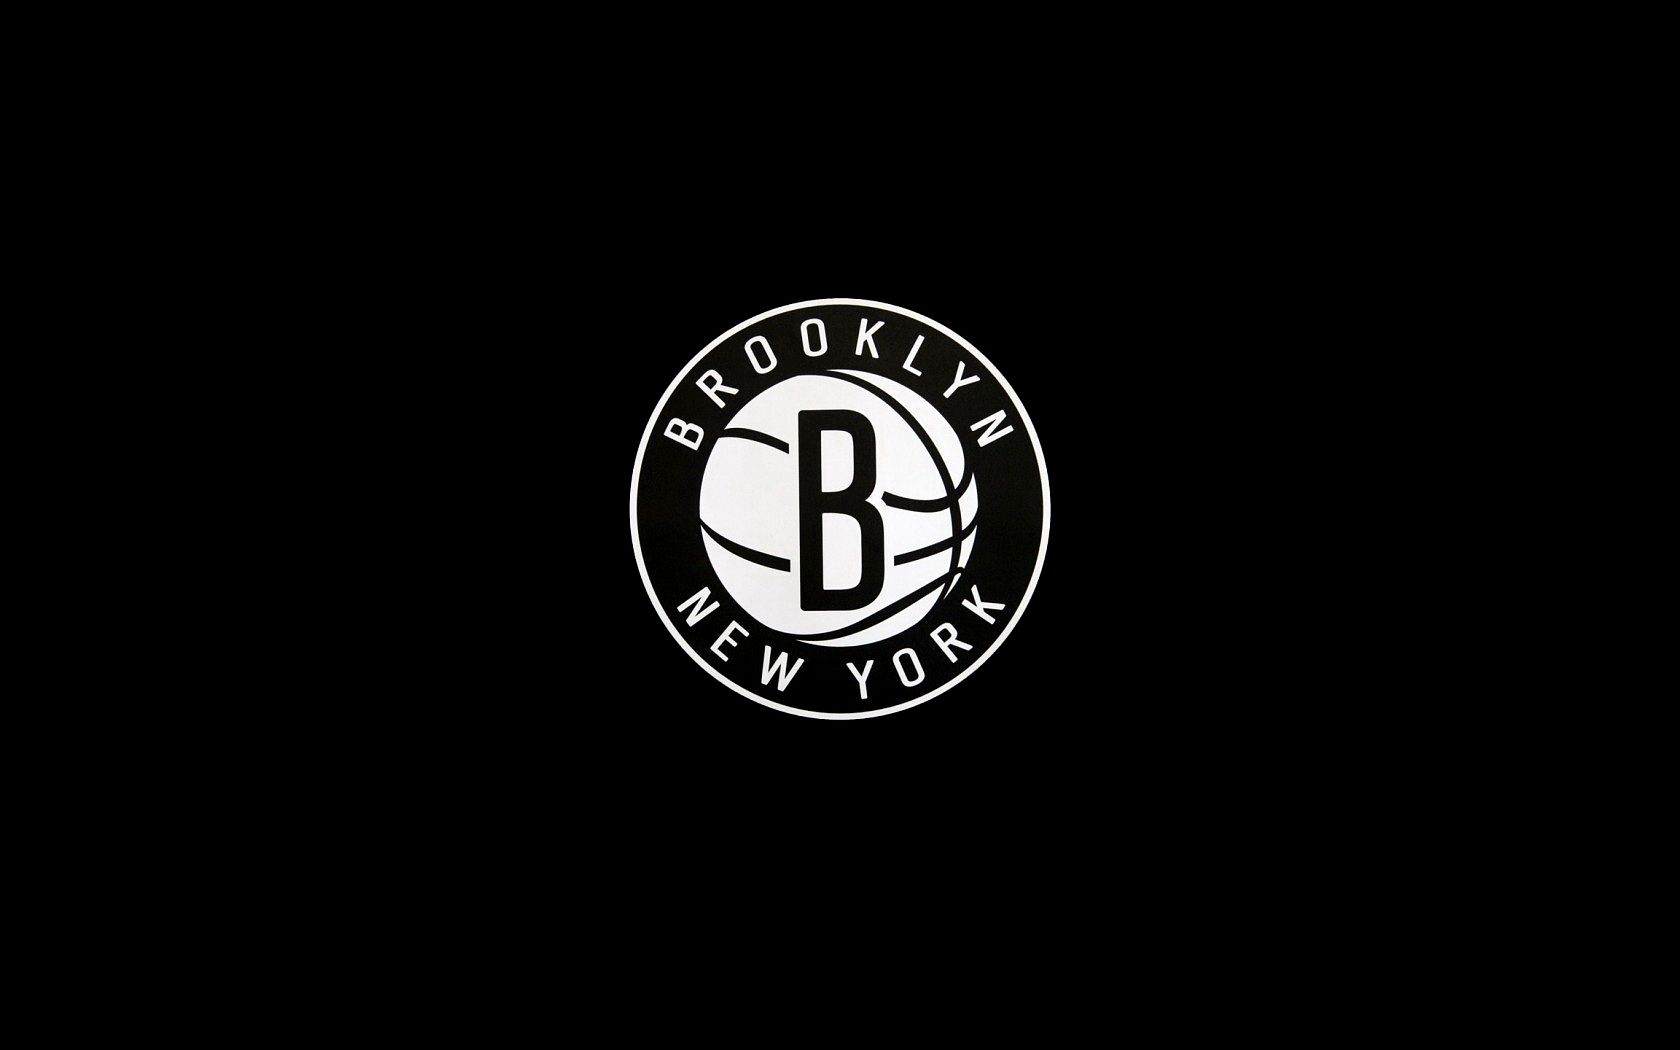 Brooklyn Nets Wallpapers HD Wallpapers Early